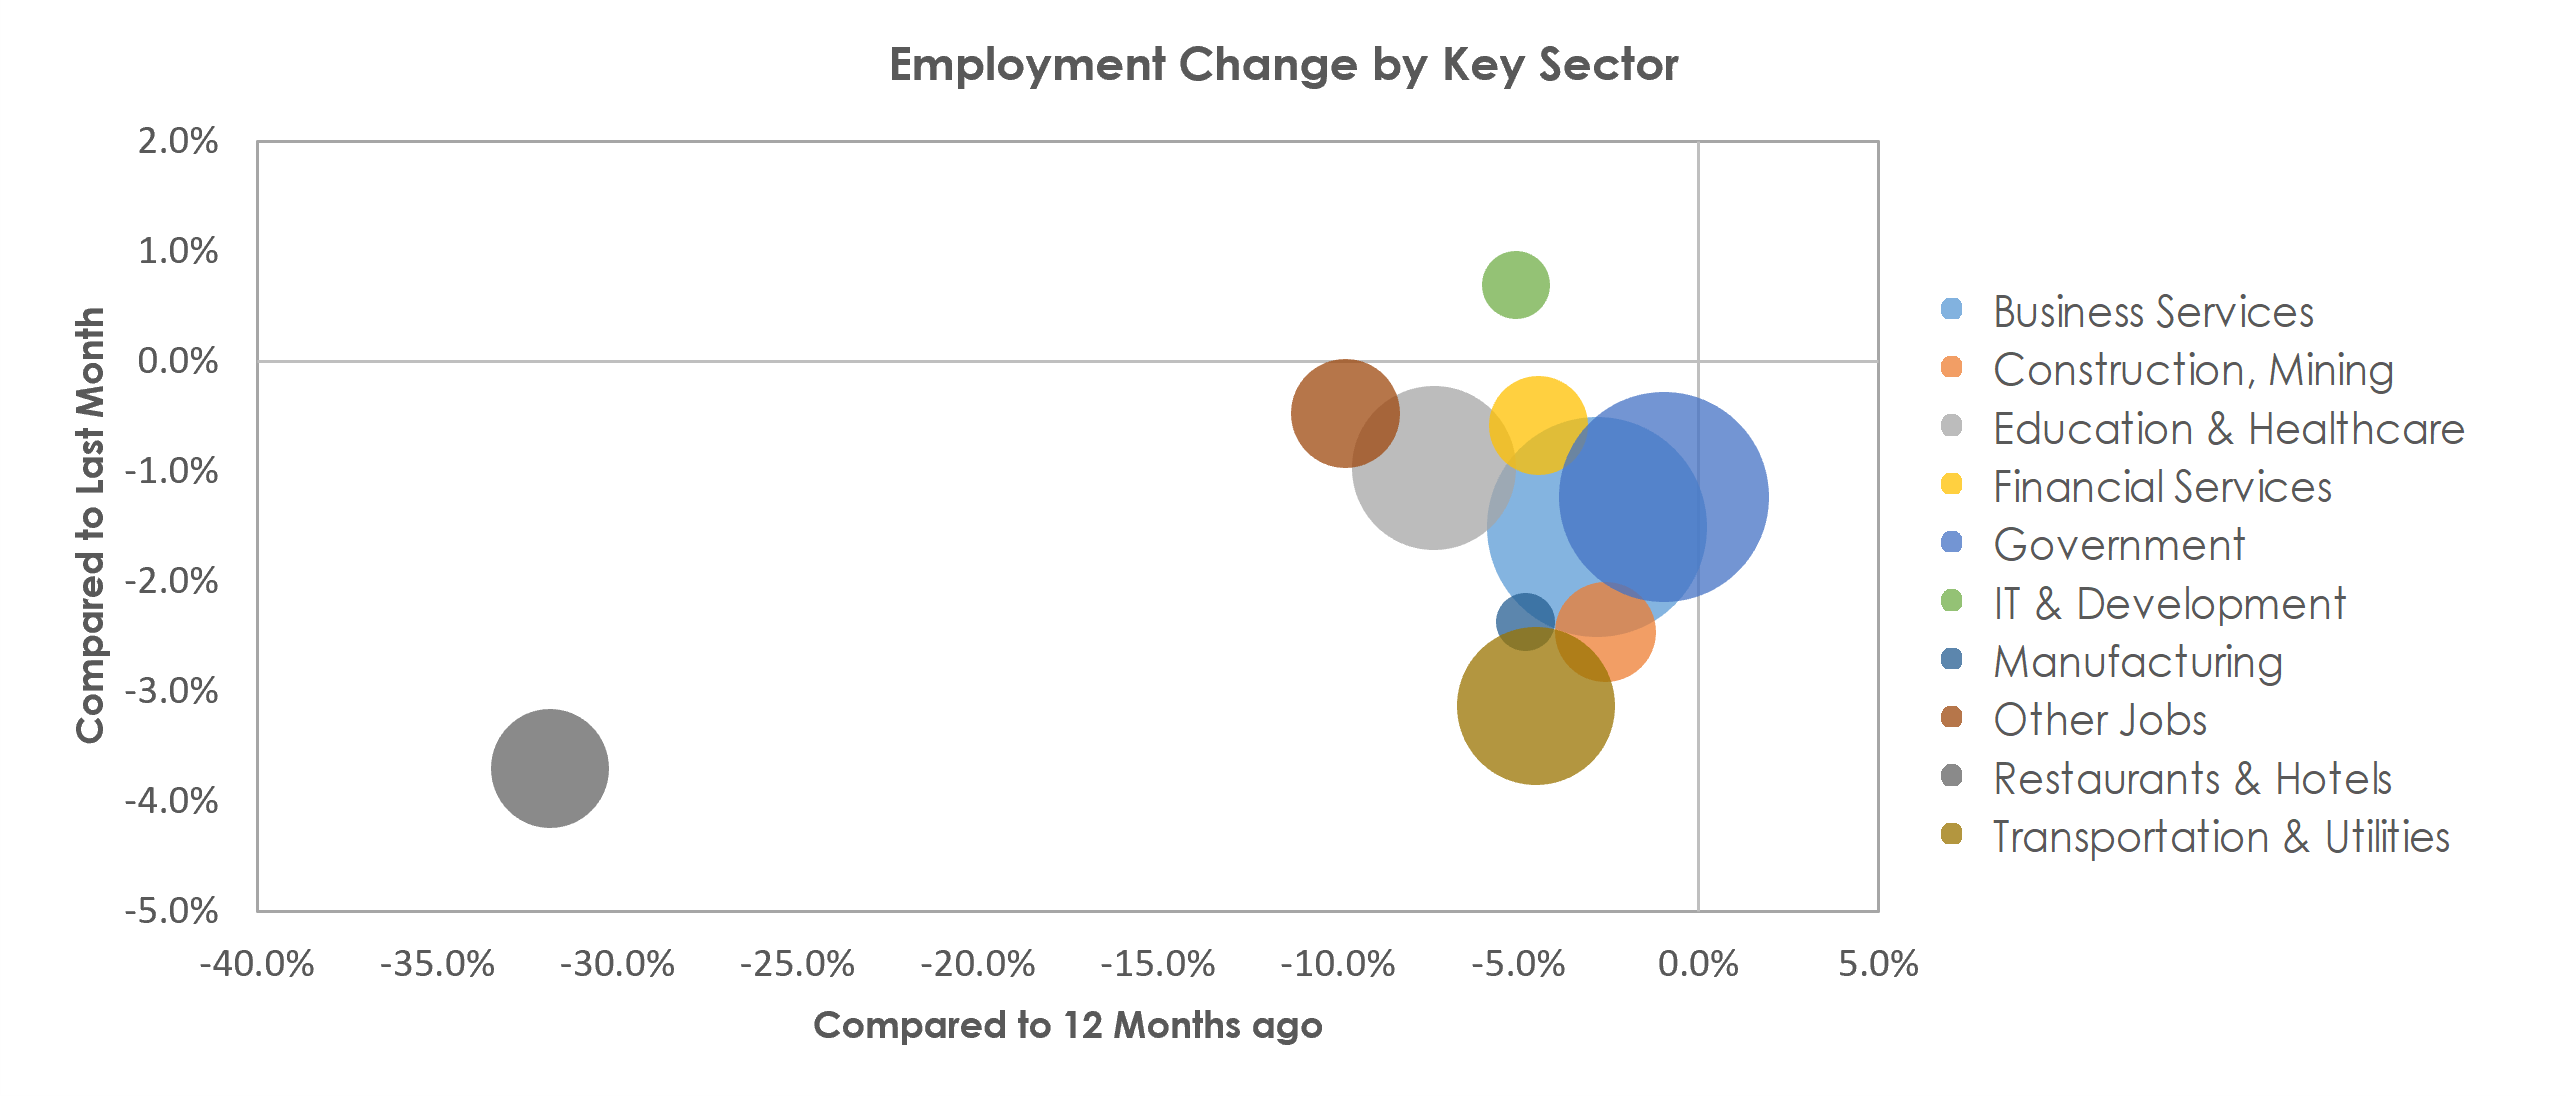 Washington-Arlington-Alexandria, DC-VA-MD-WV Unemployment by Industry January 2021